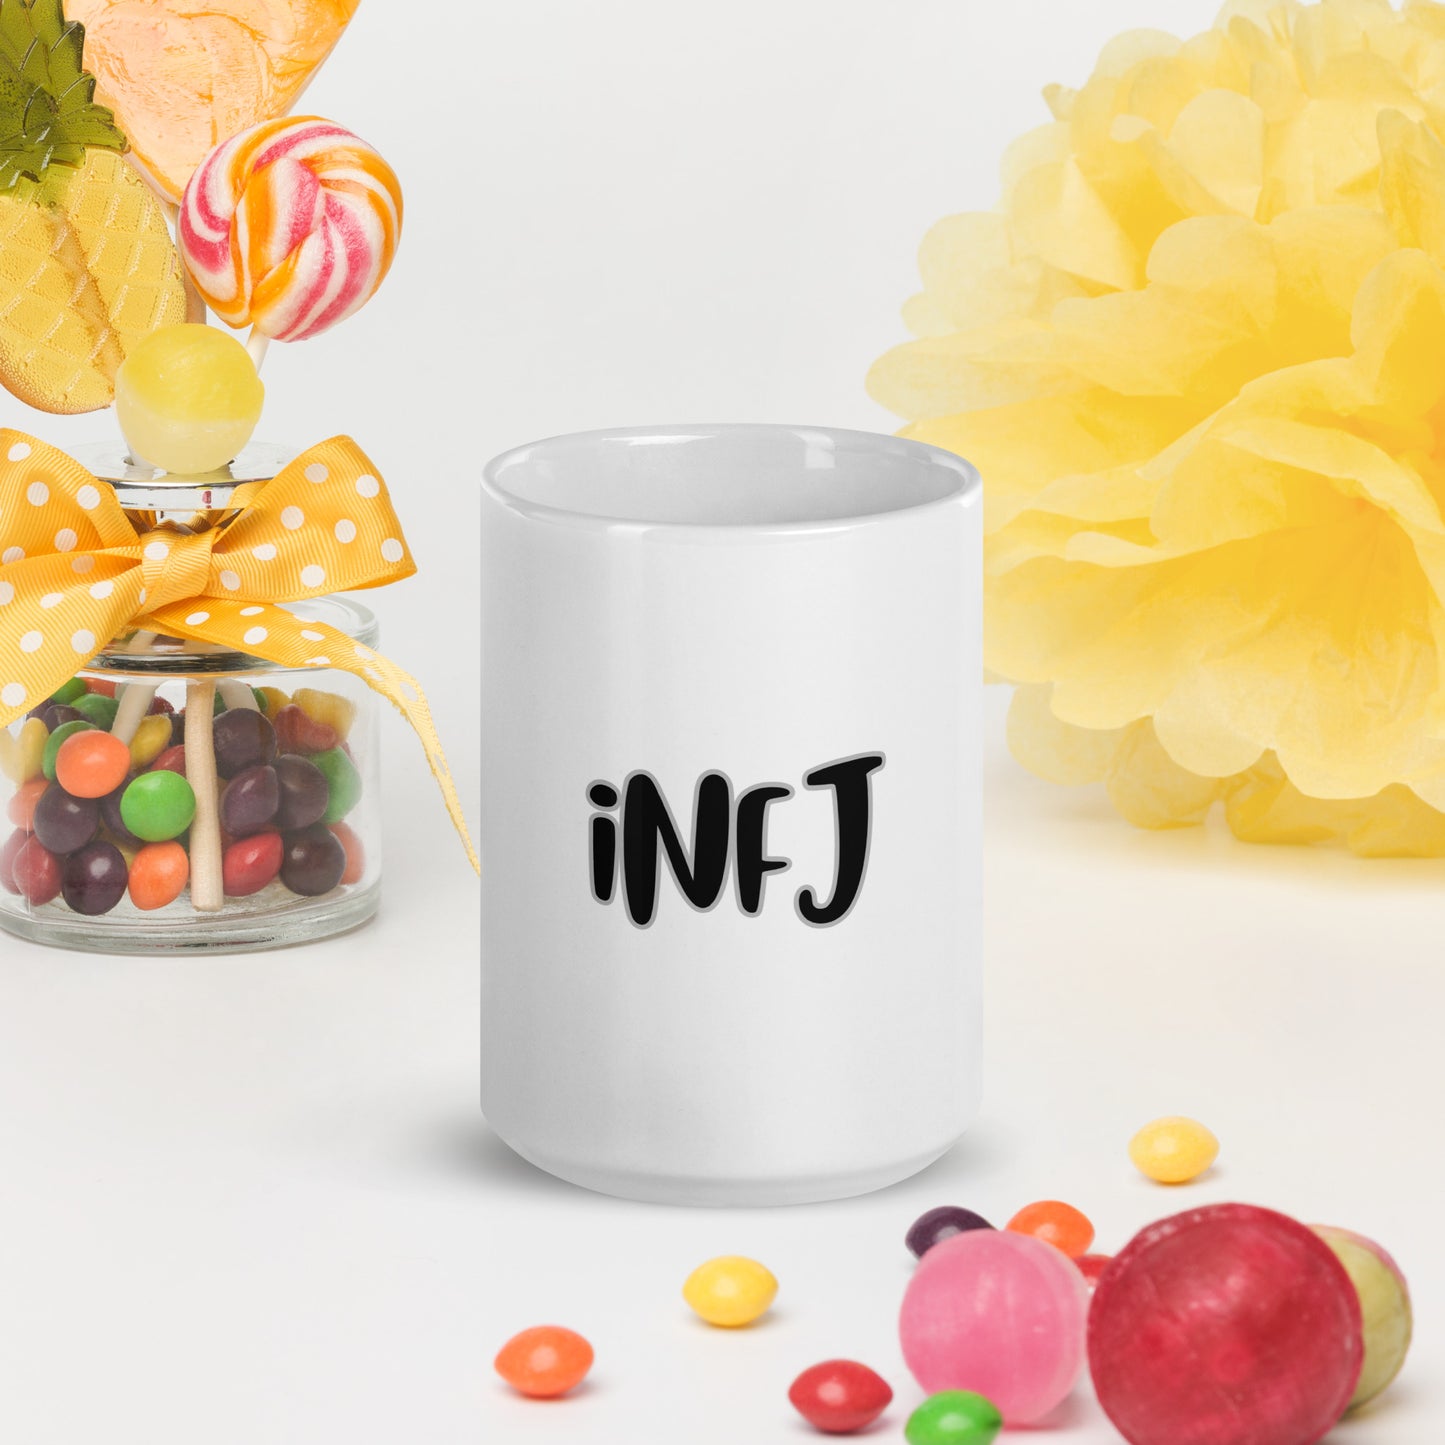 INFJ White glossy mug